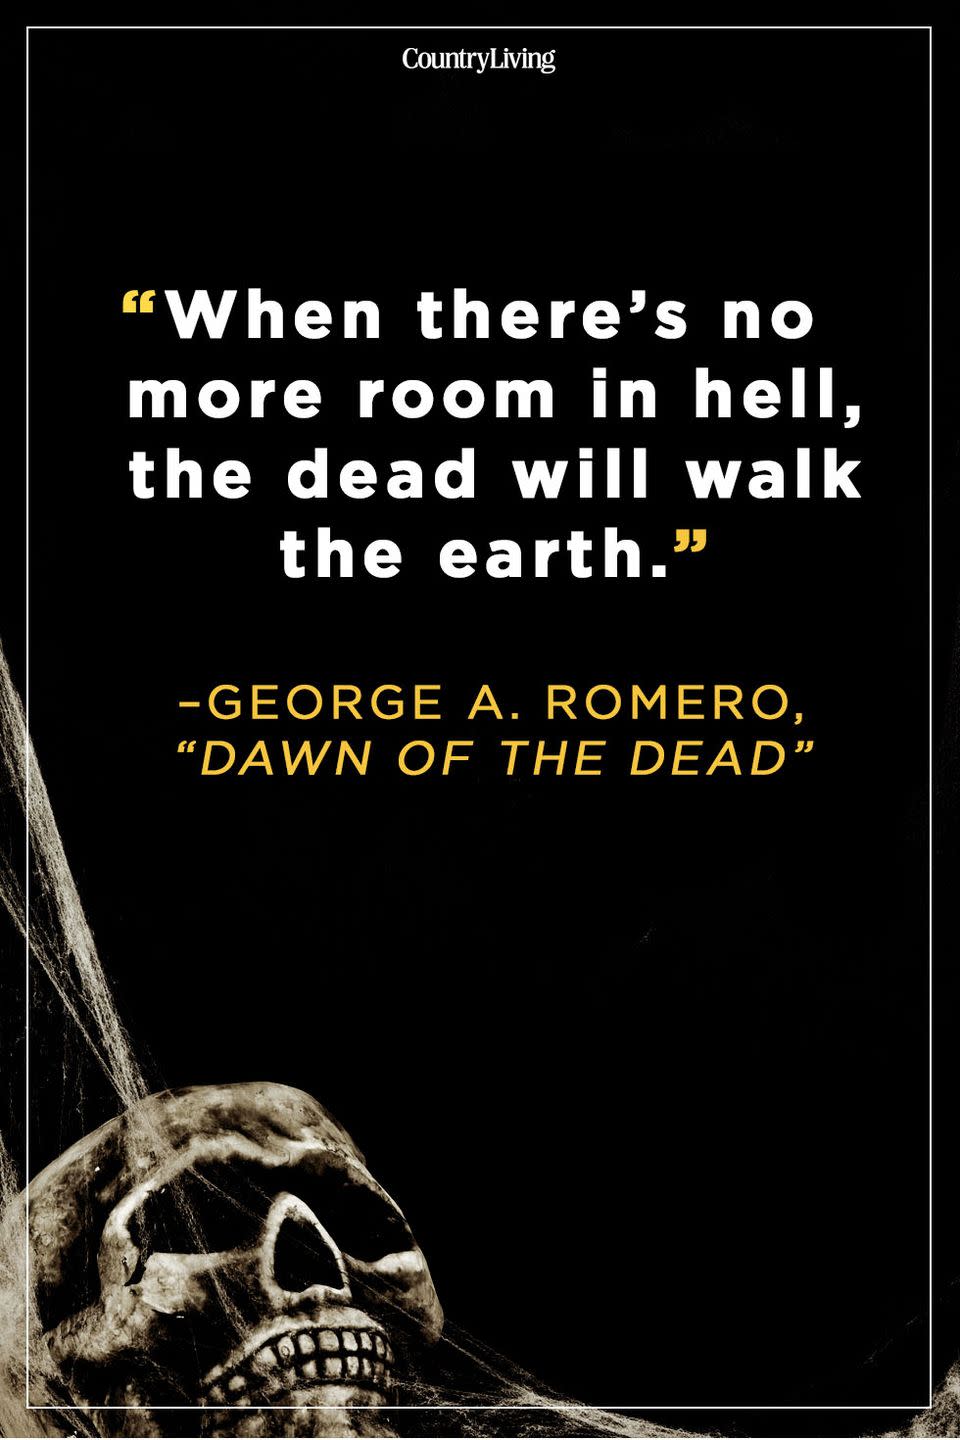 George A. Romero, "Dawn of the Dead"